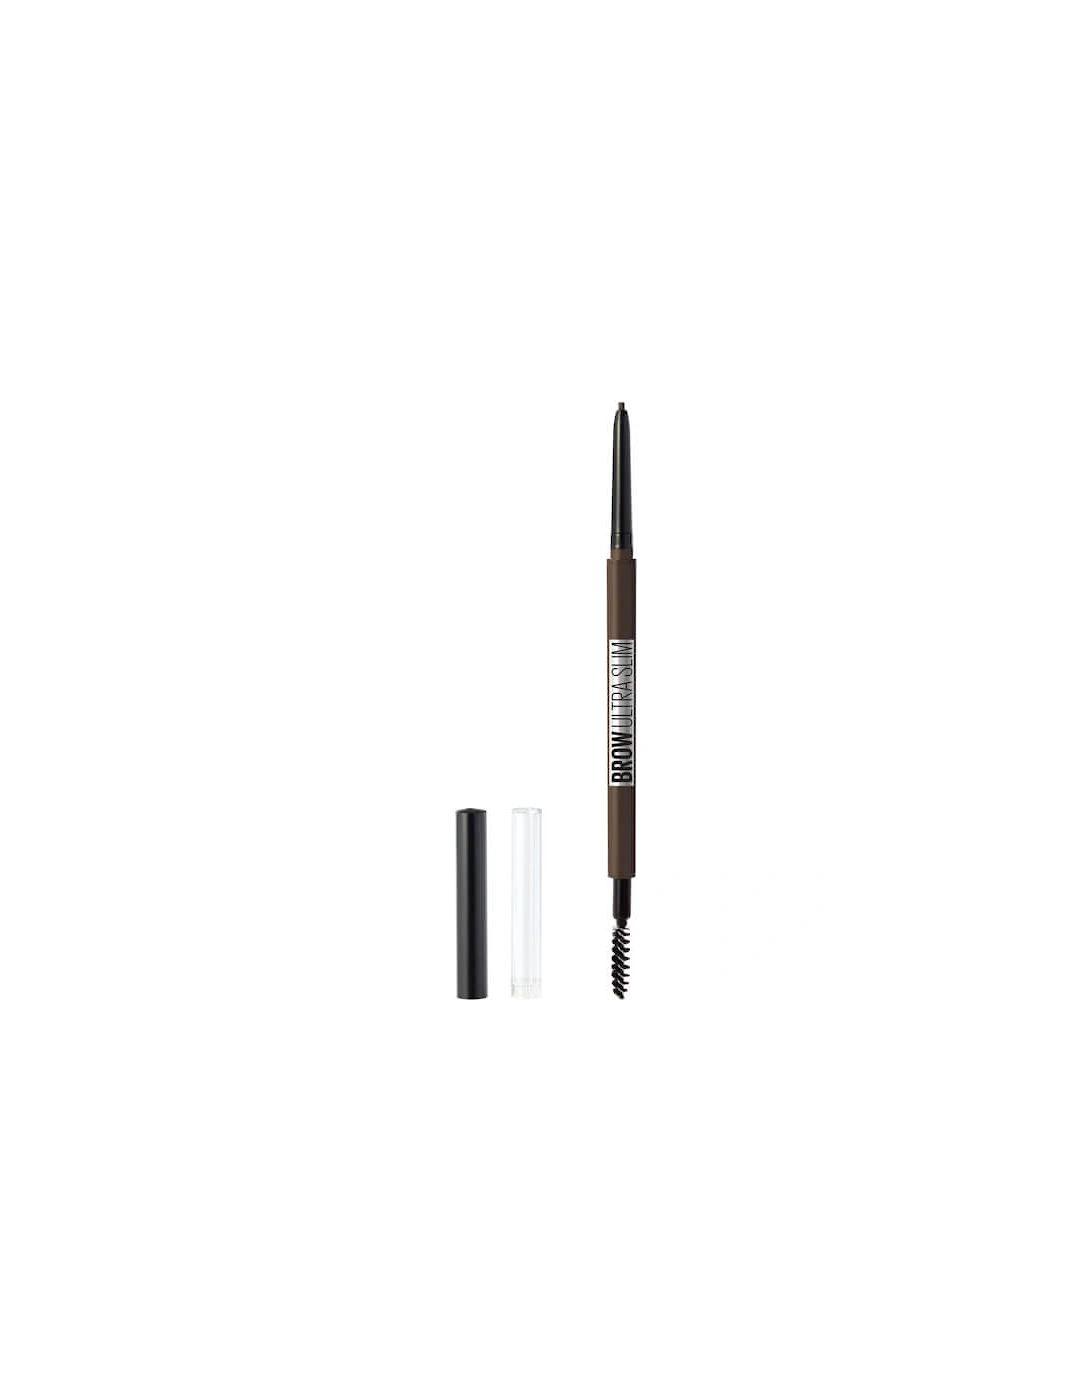 Express Brow Ultra Slim Defining Natural Fuller Looking Brows Eyebrow Pencil - 05 Black Brown, 2 of 1